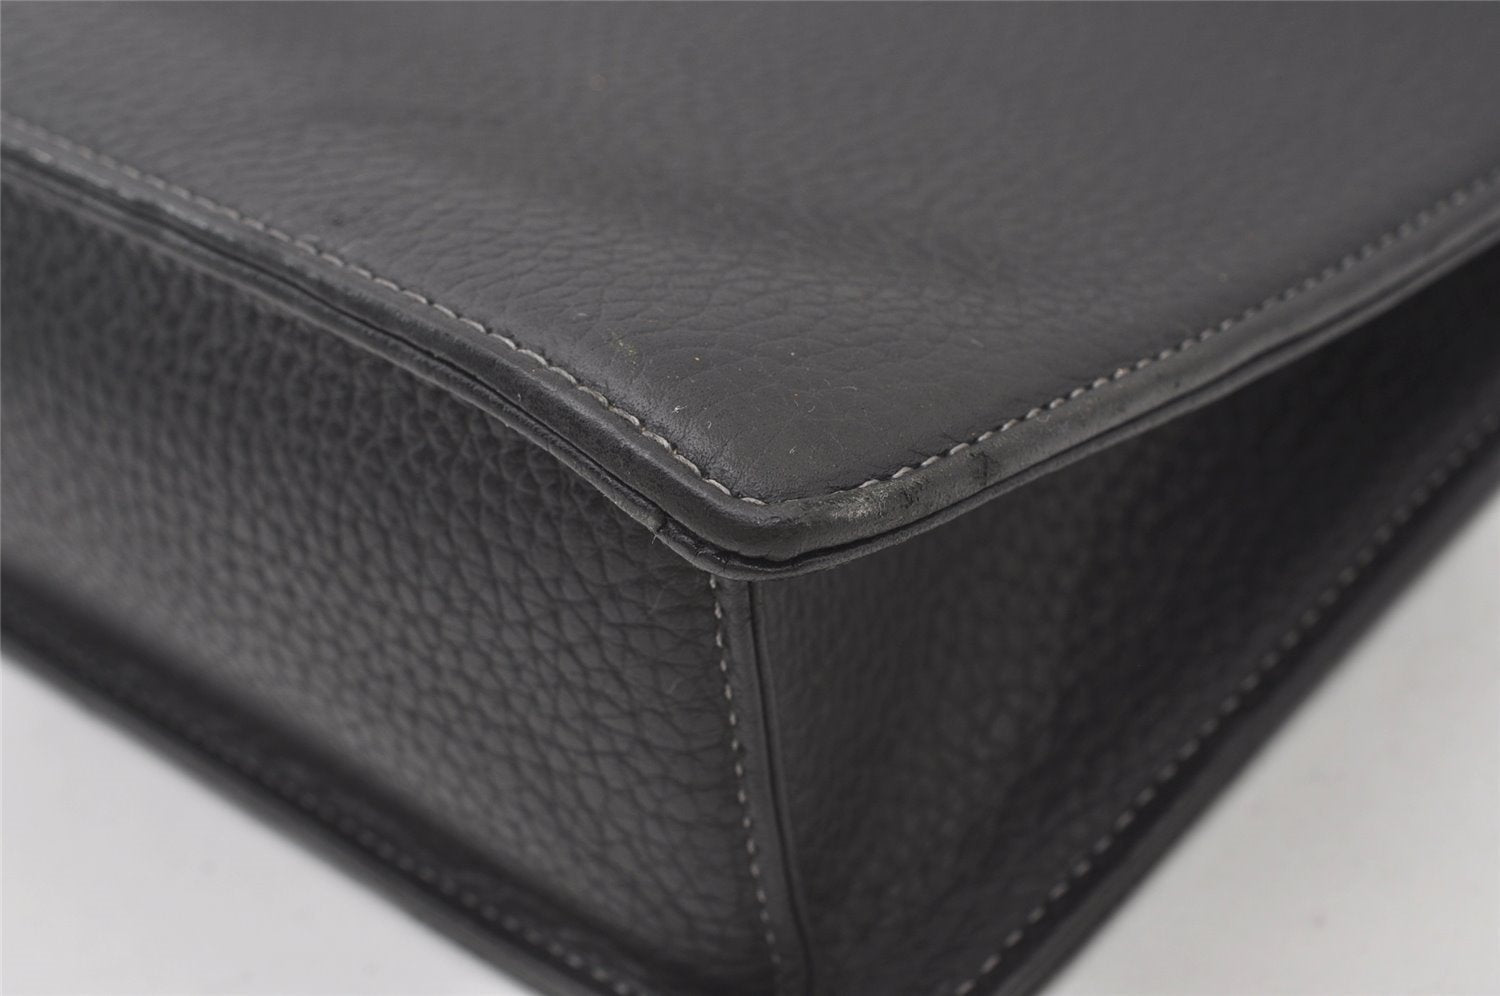 Authentic BURBERRY Vintage Leather Briefcase Business Bag Black 9555I